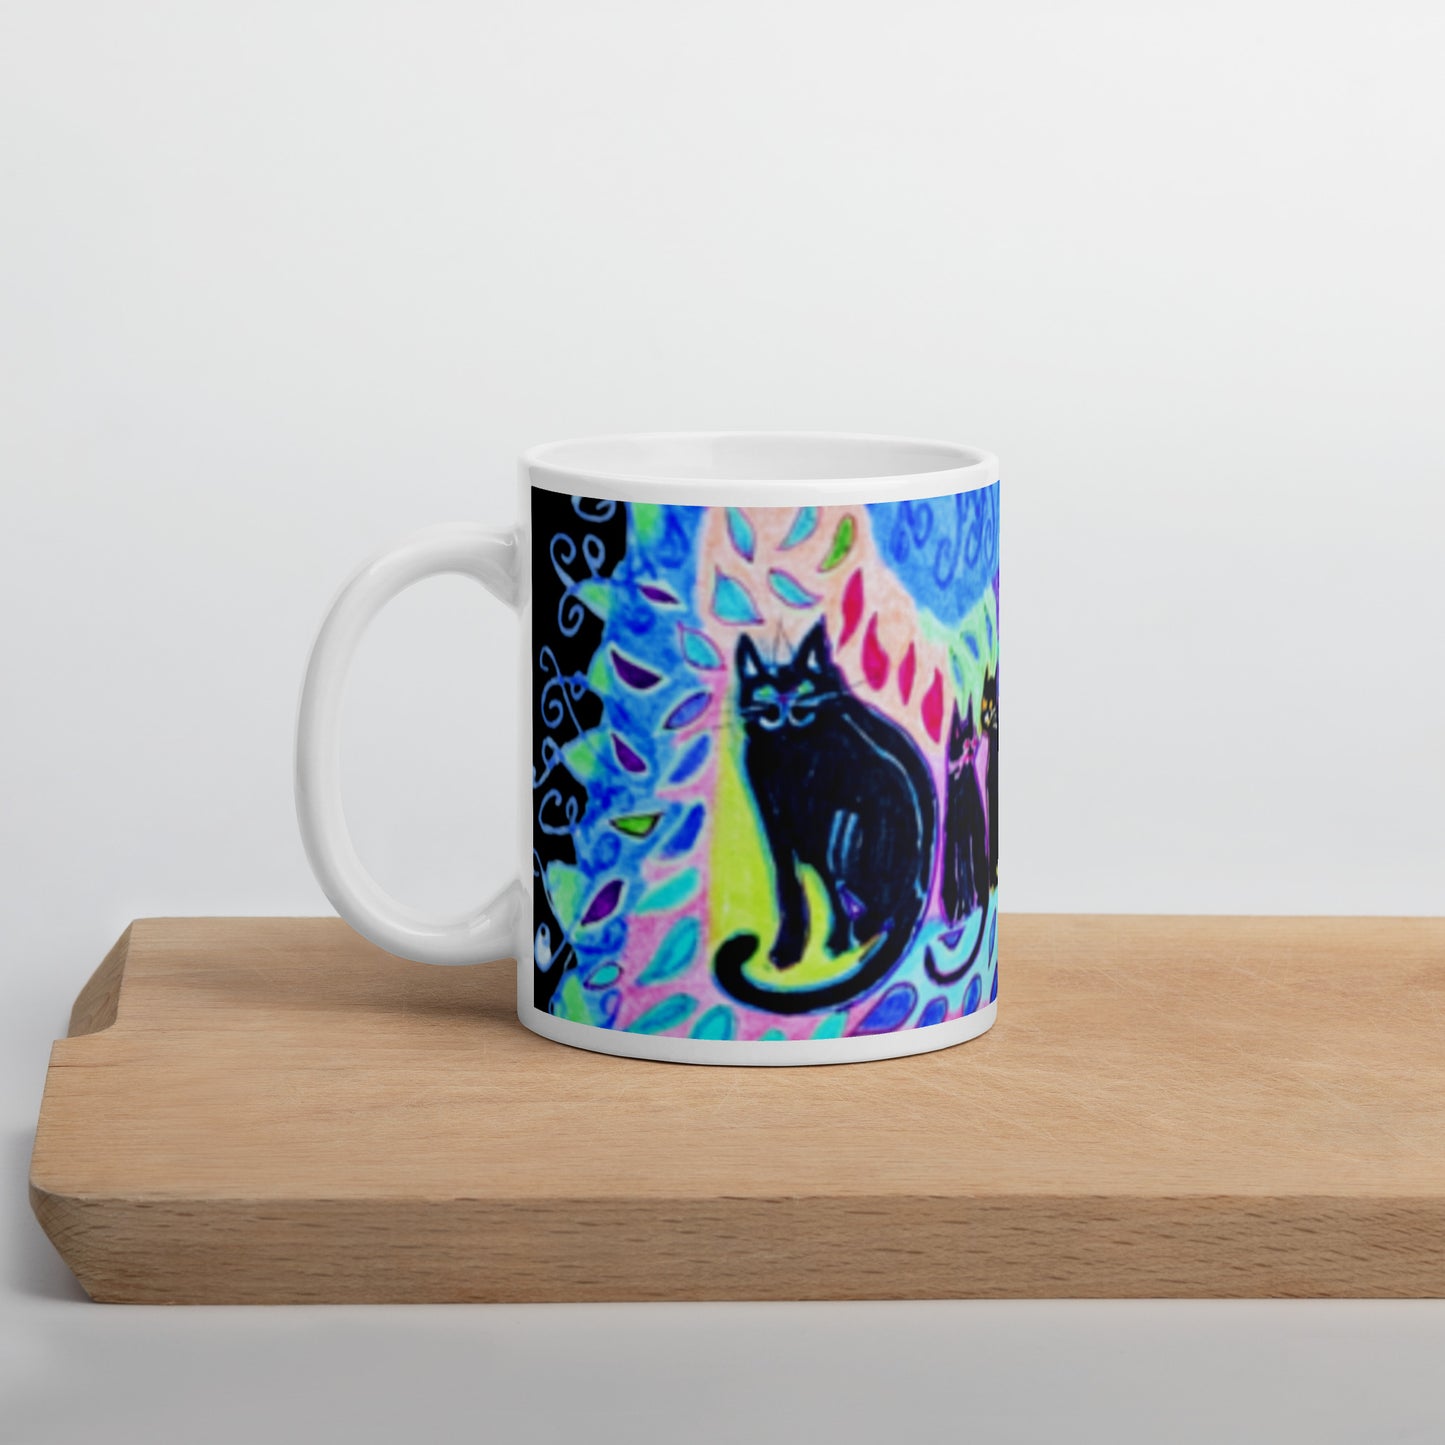 Five Black Cats glossy mug